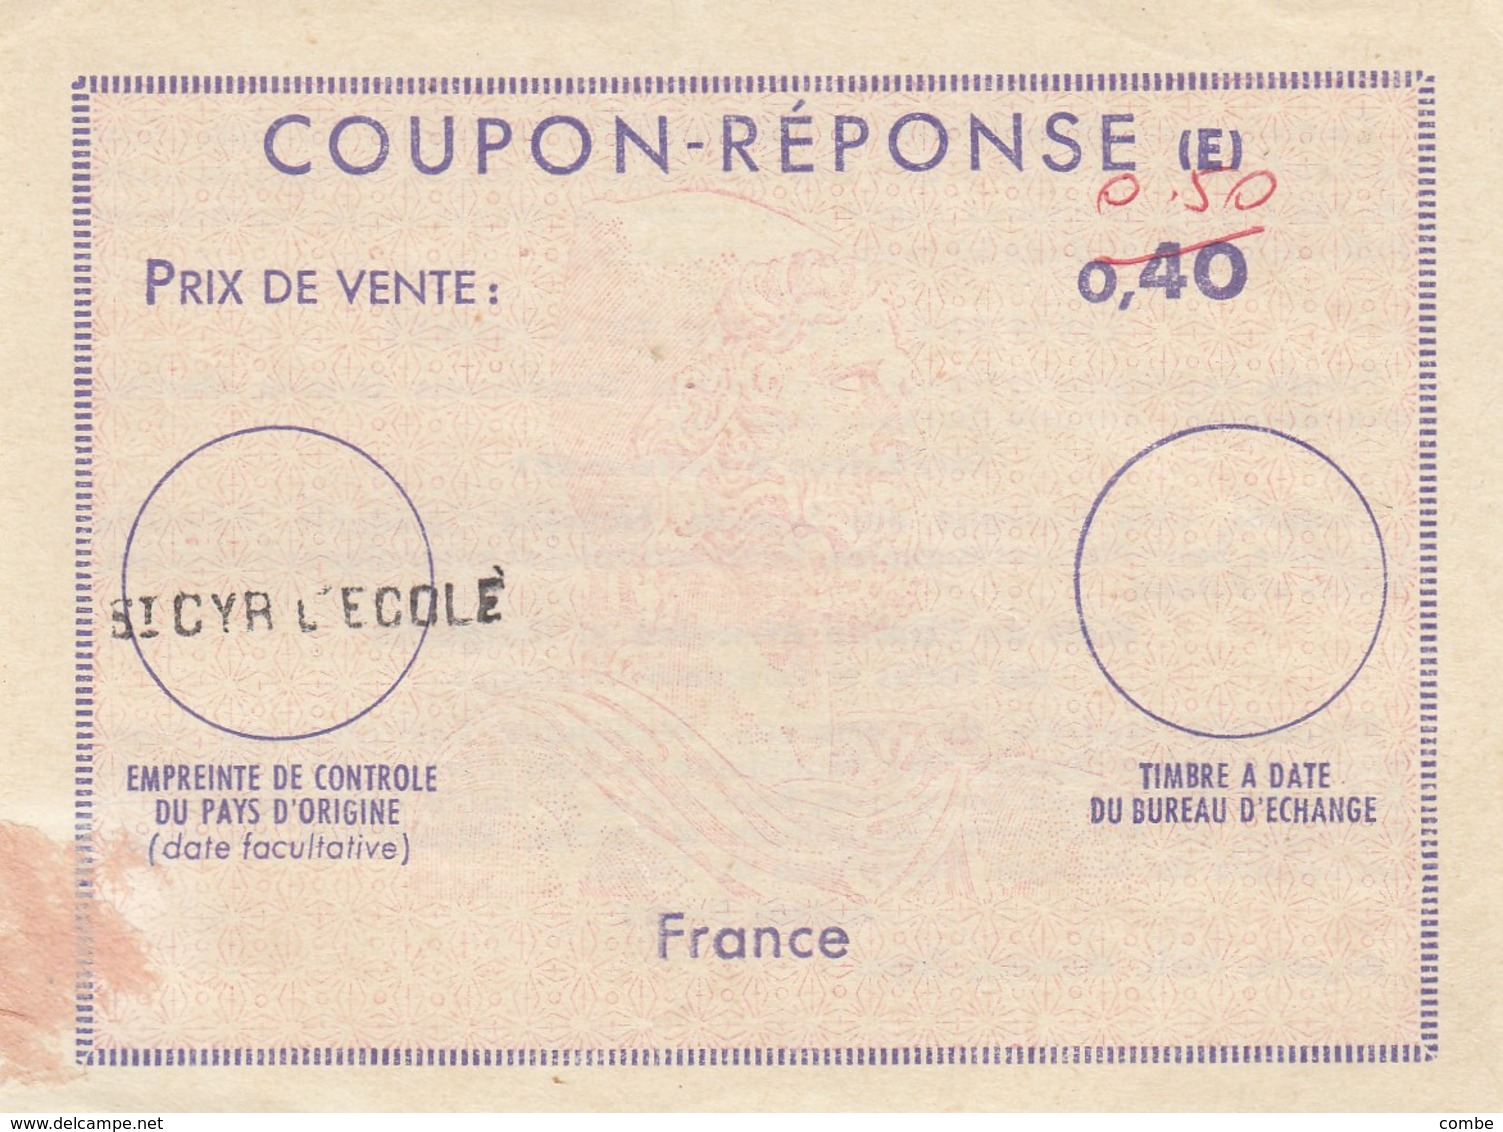 COUPON-REPONSE INTERNATIONAL. E. FRANCE. 0,40 FRANC RECTIFIE 0,50 FRANC . ST CYR-L'ECOLE      / 2 - Cupón-respuesta